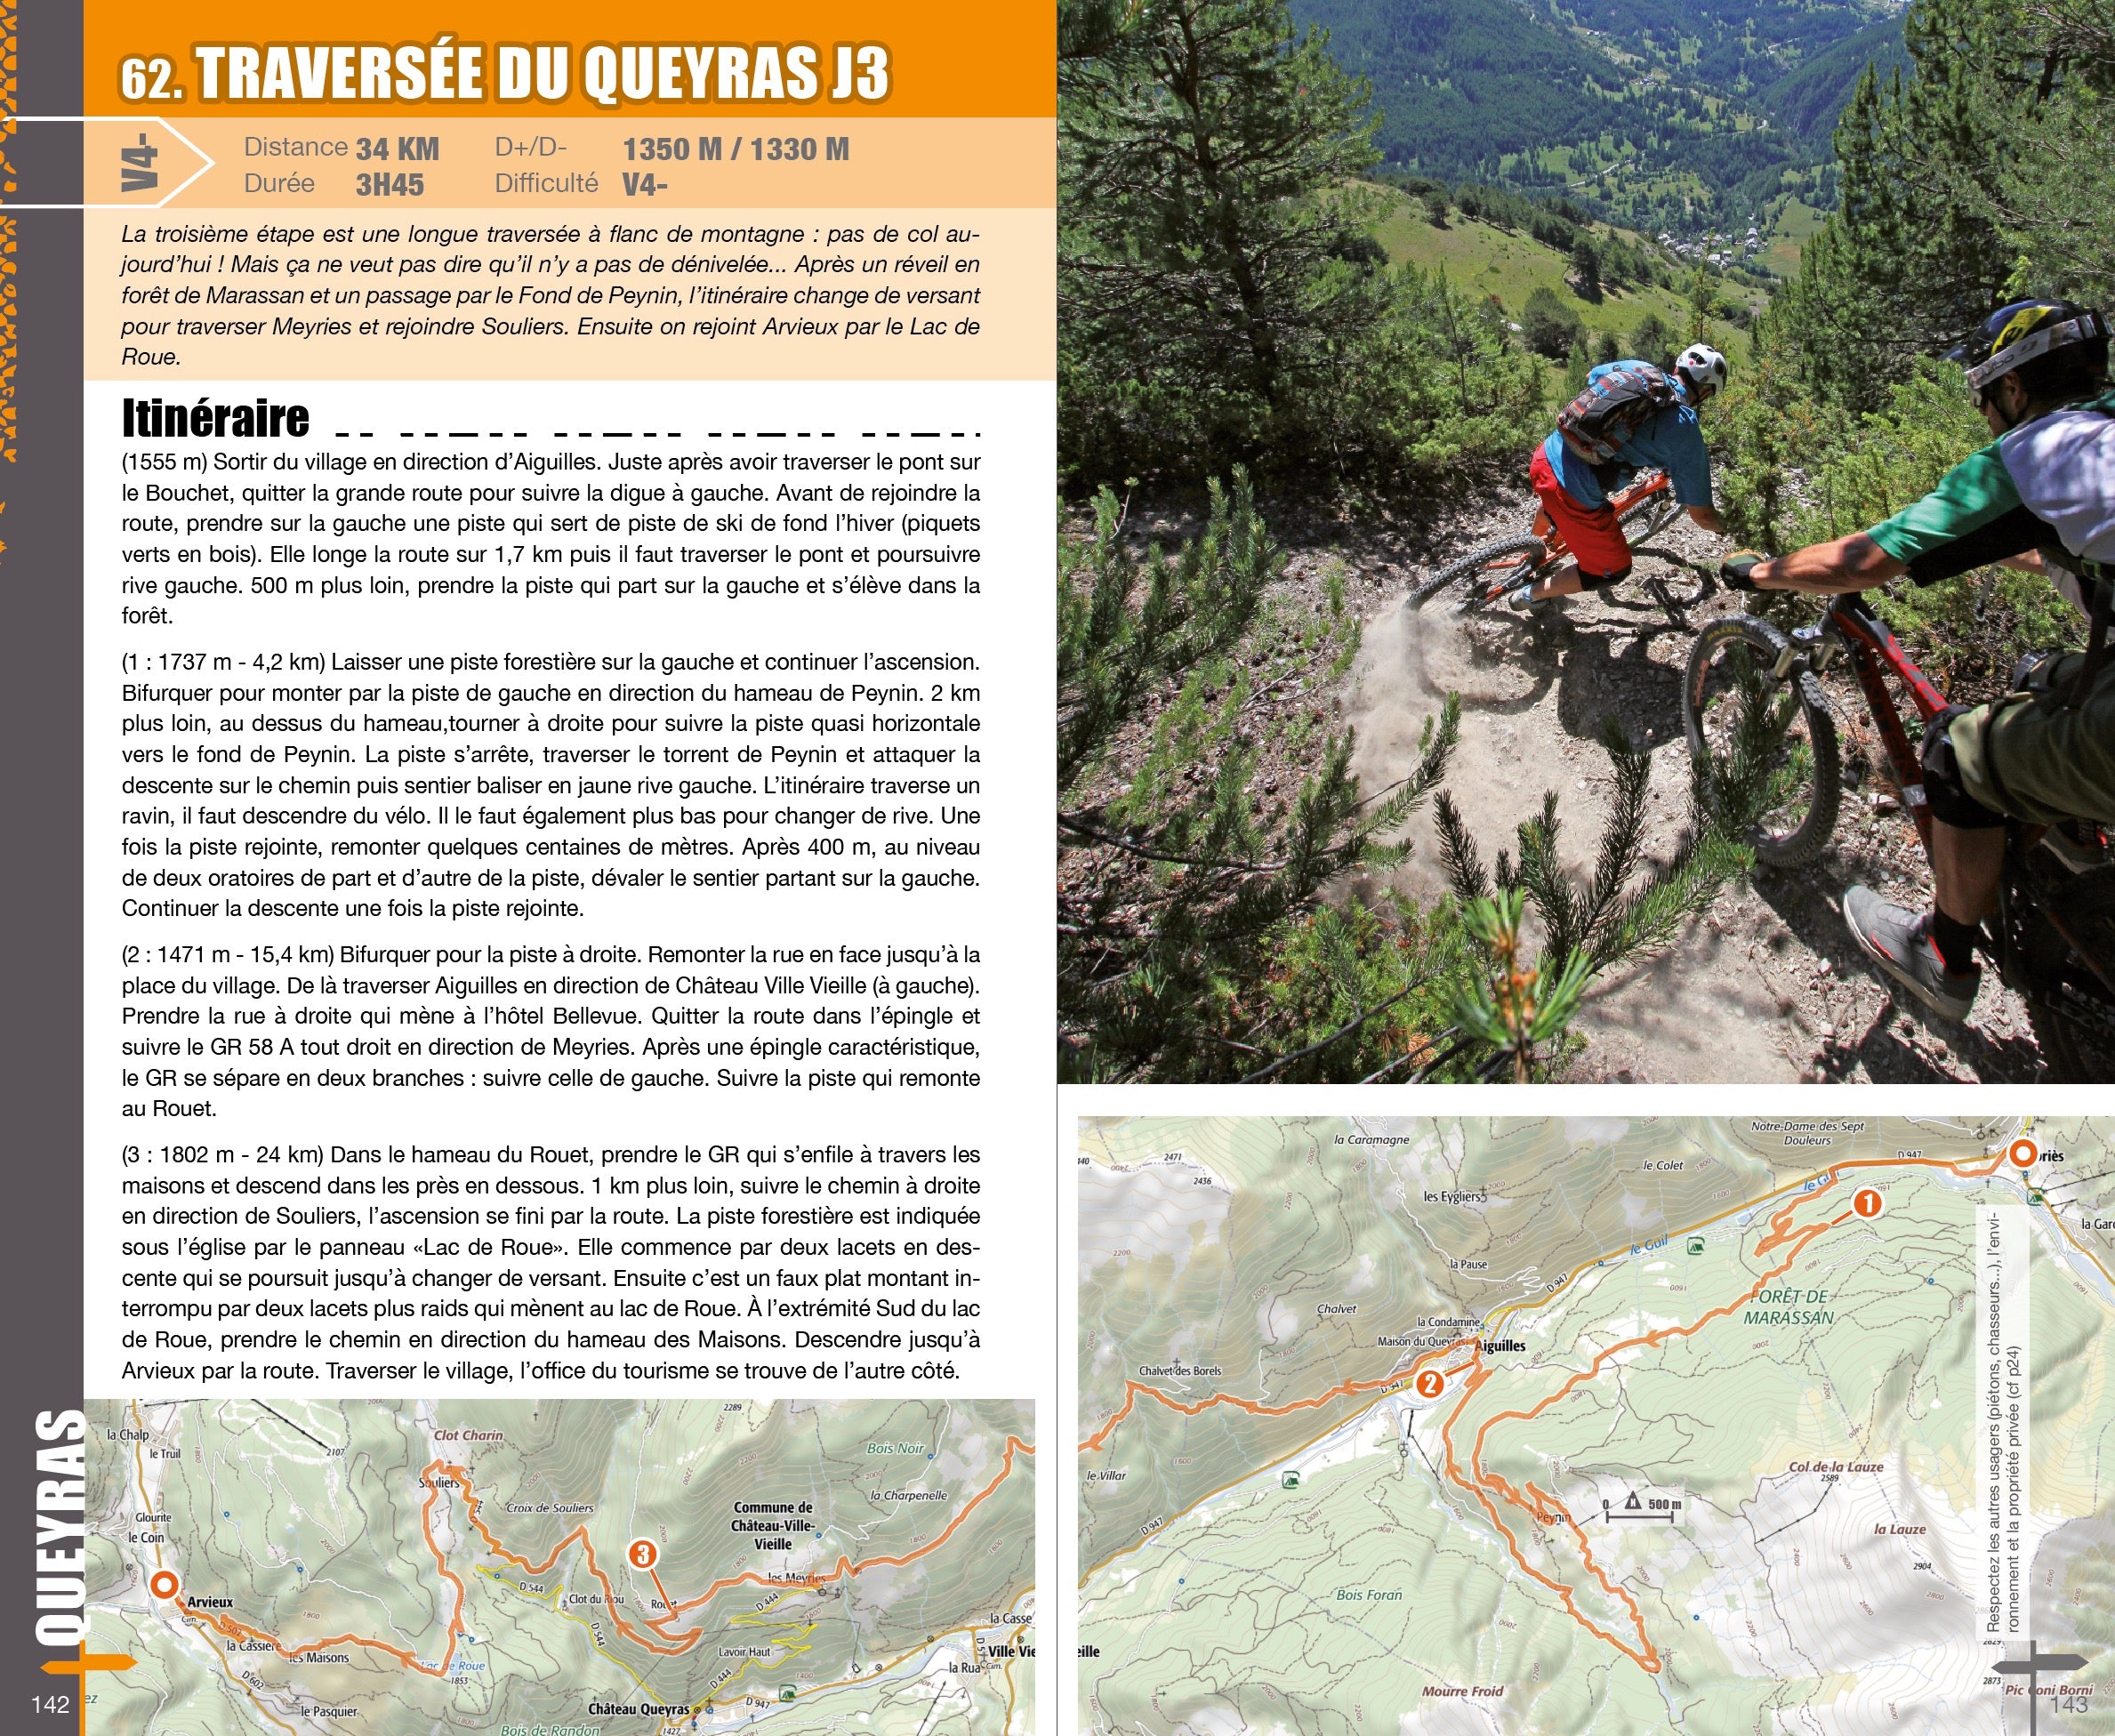 VTOPO VTT Hautes-Alpes - 2e édition